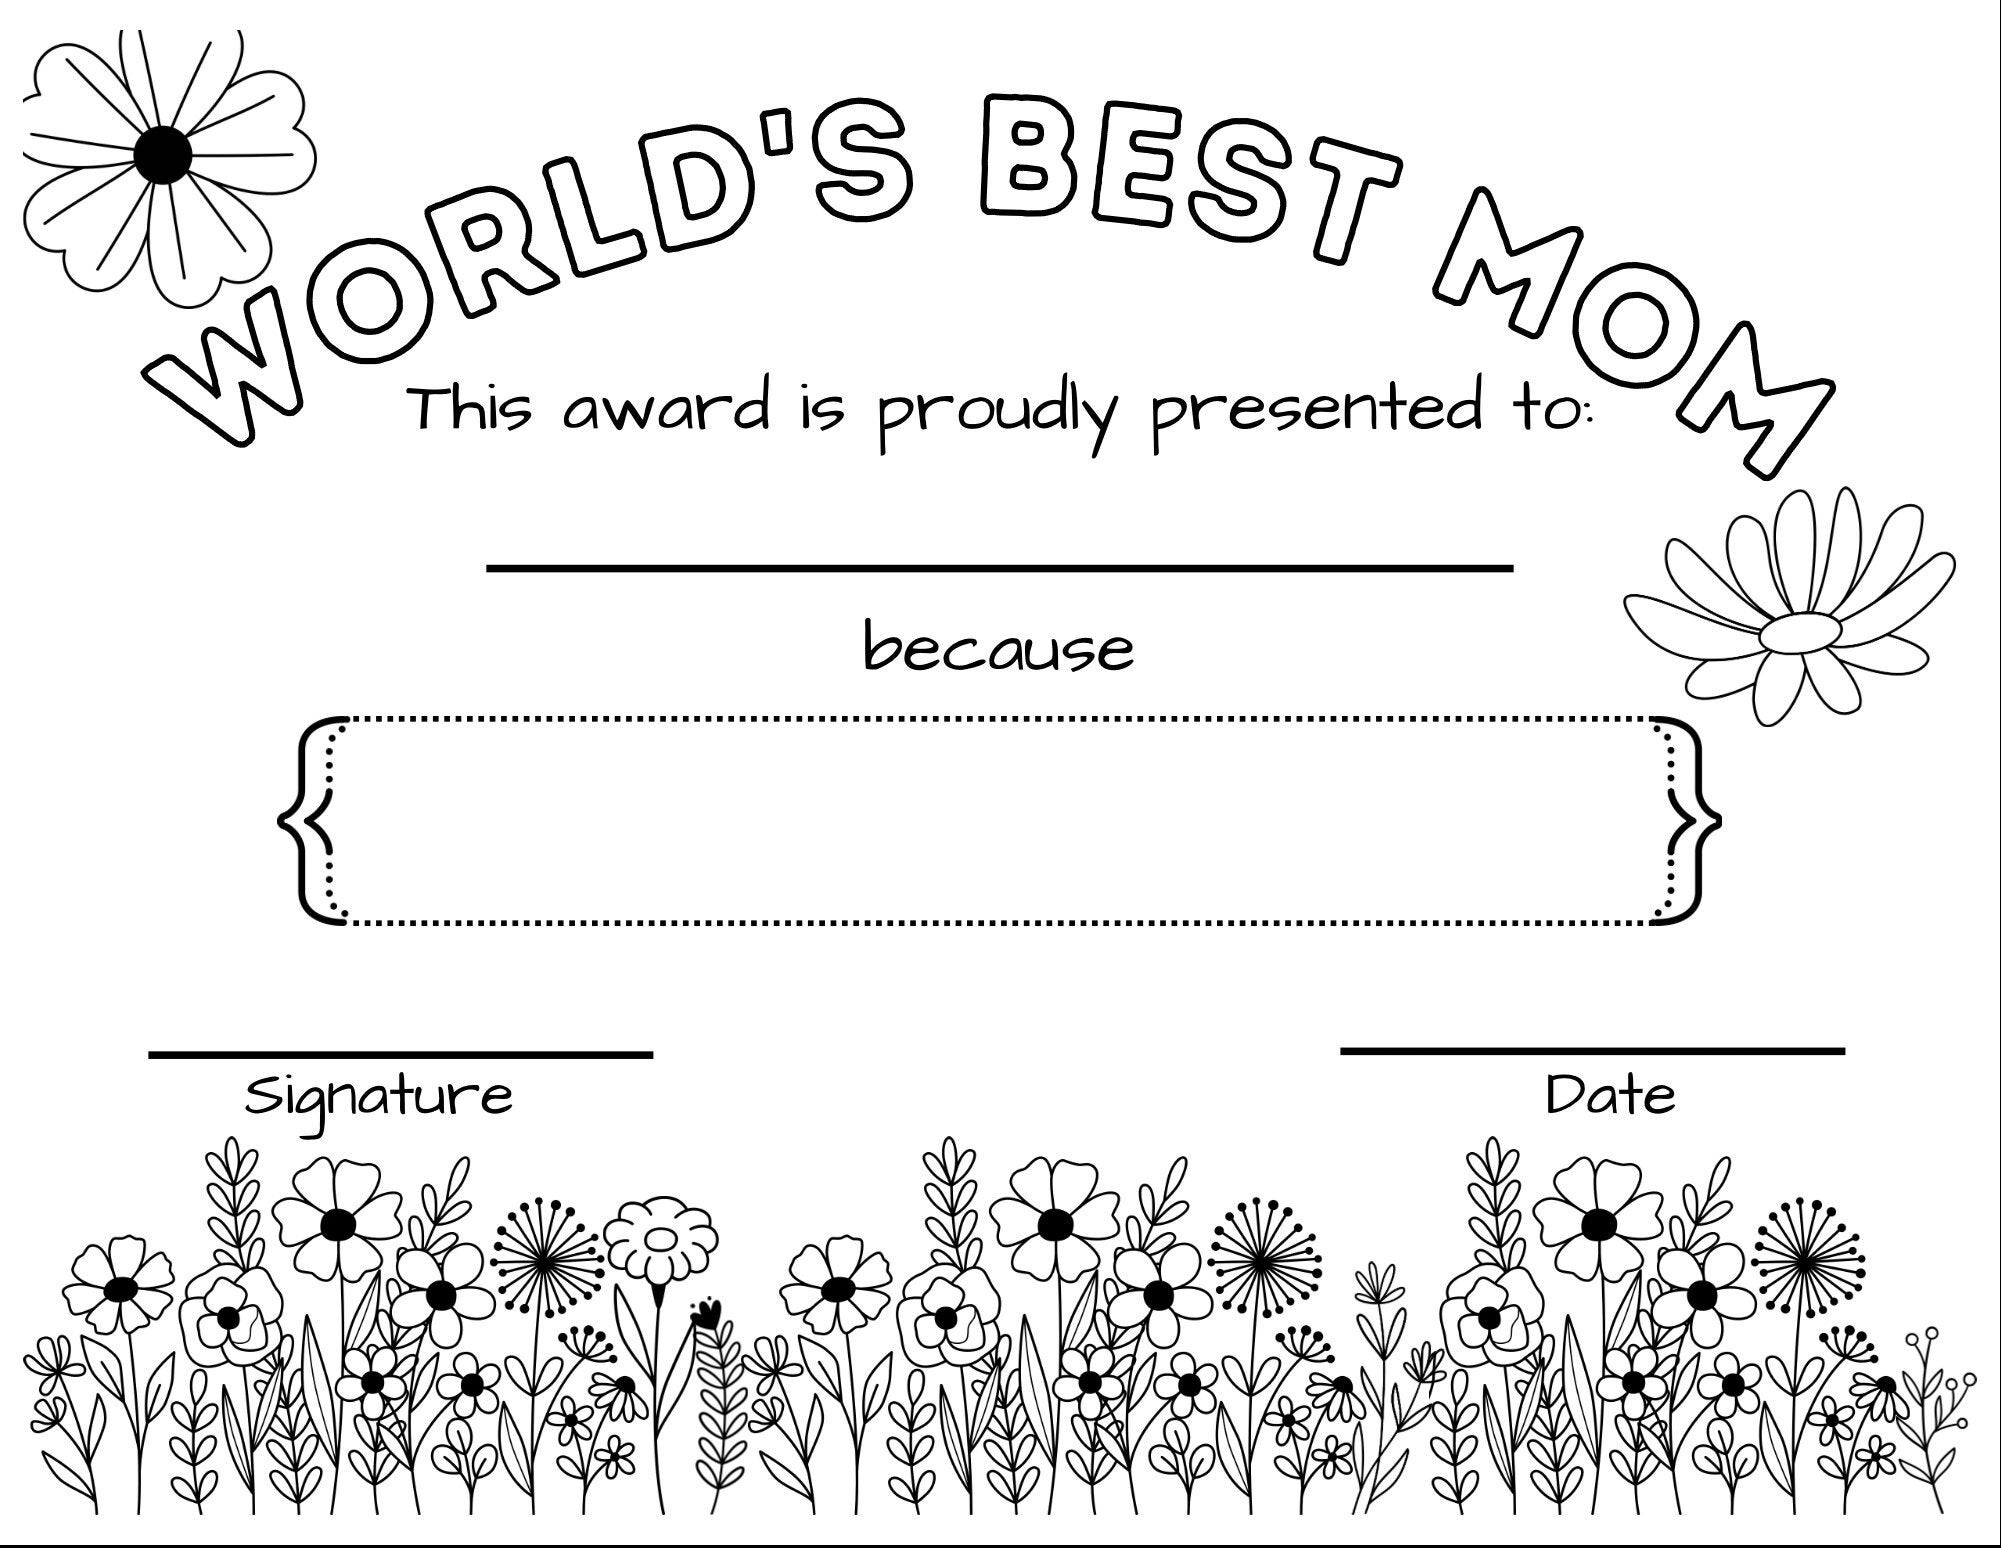 Worlds best mom certificate instant download